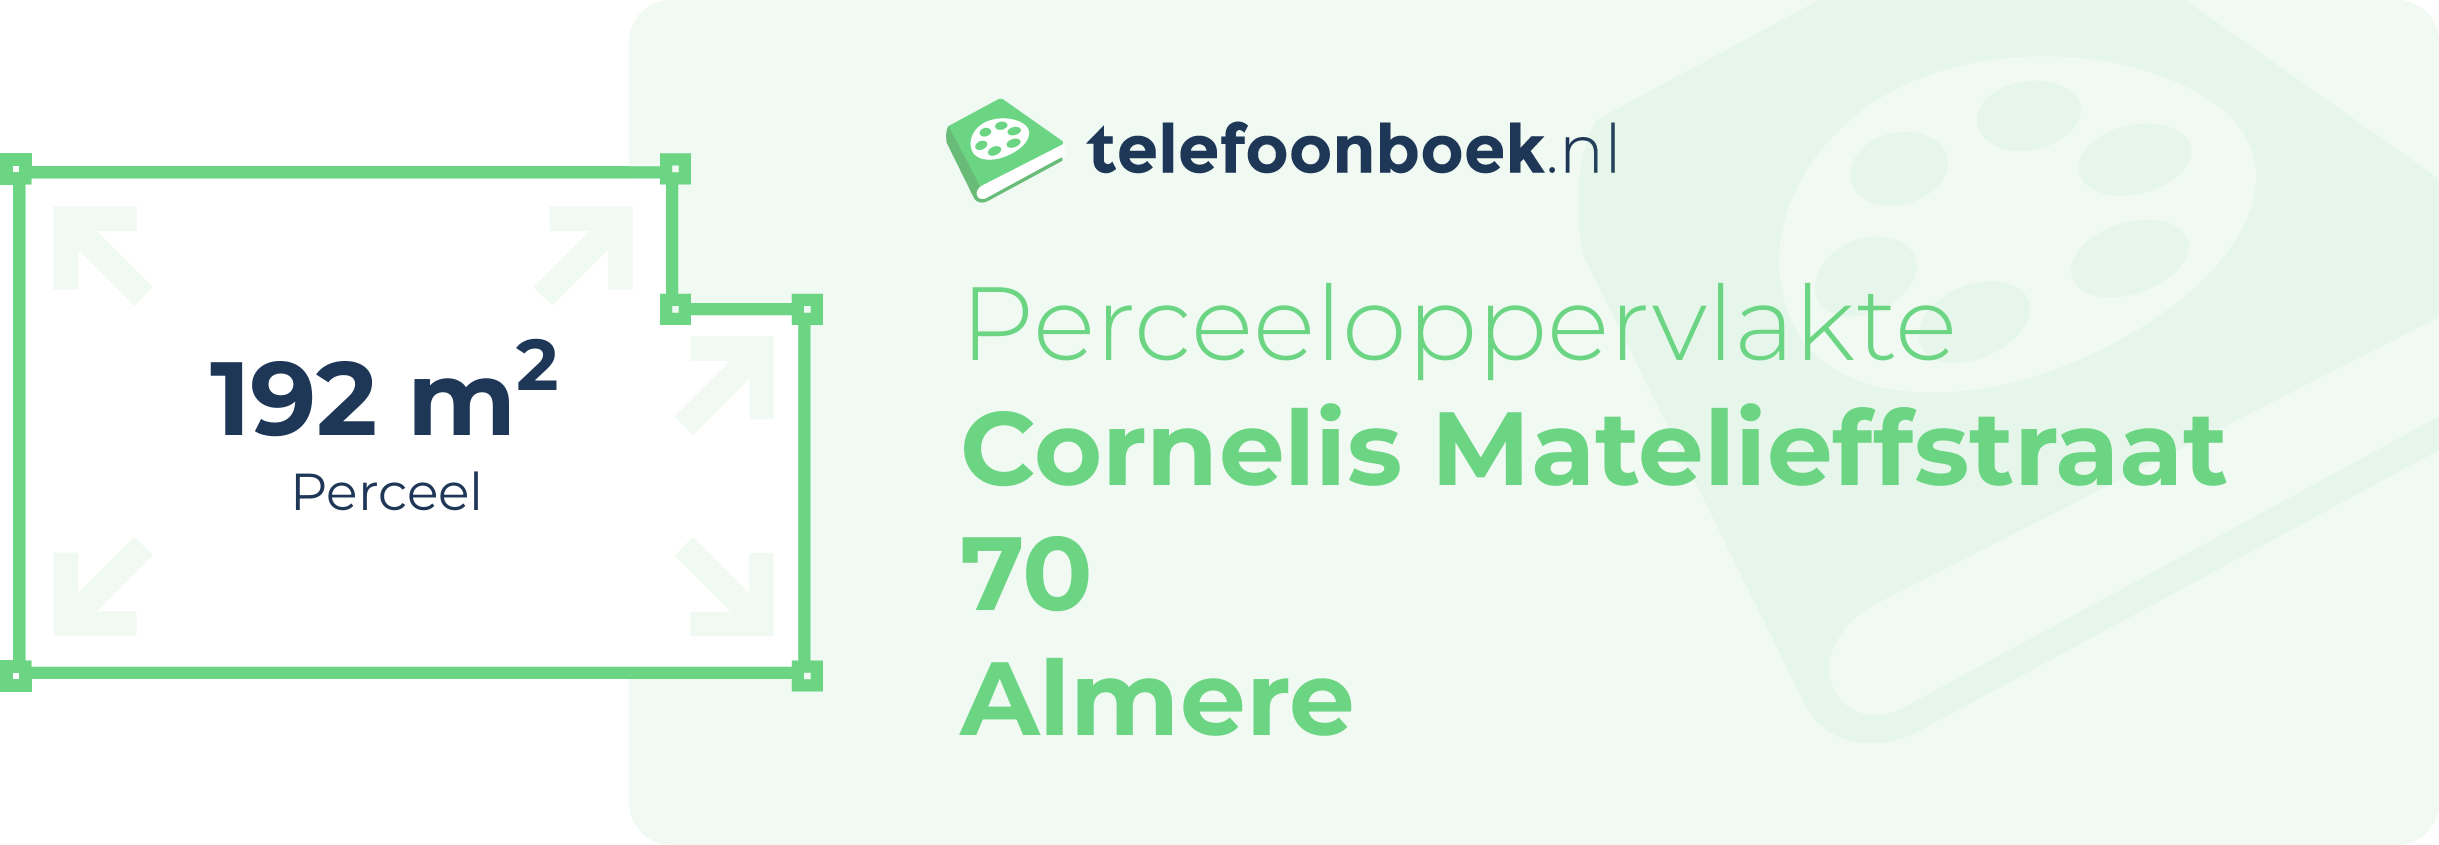 Perceeloppervlakte Cornelis Matelieffstraat 70 Almere